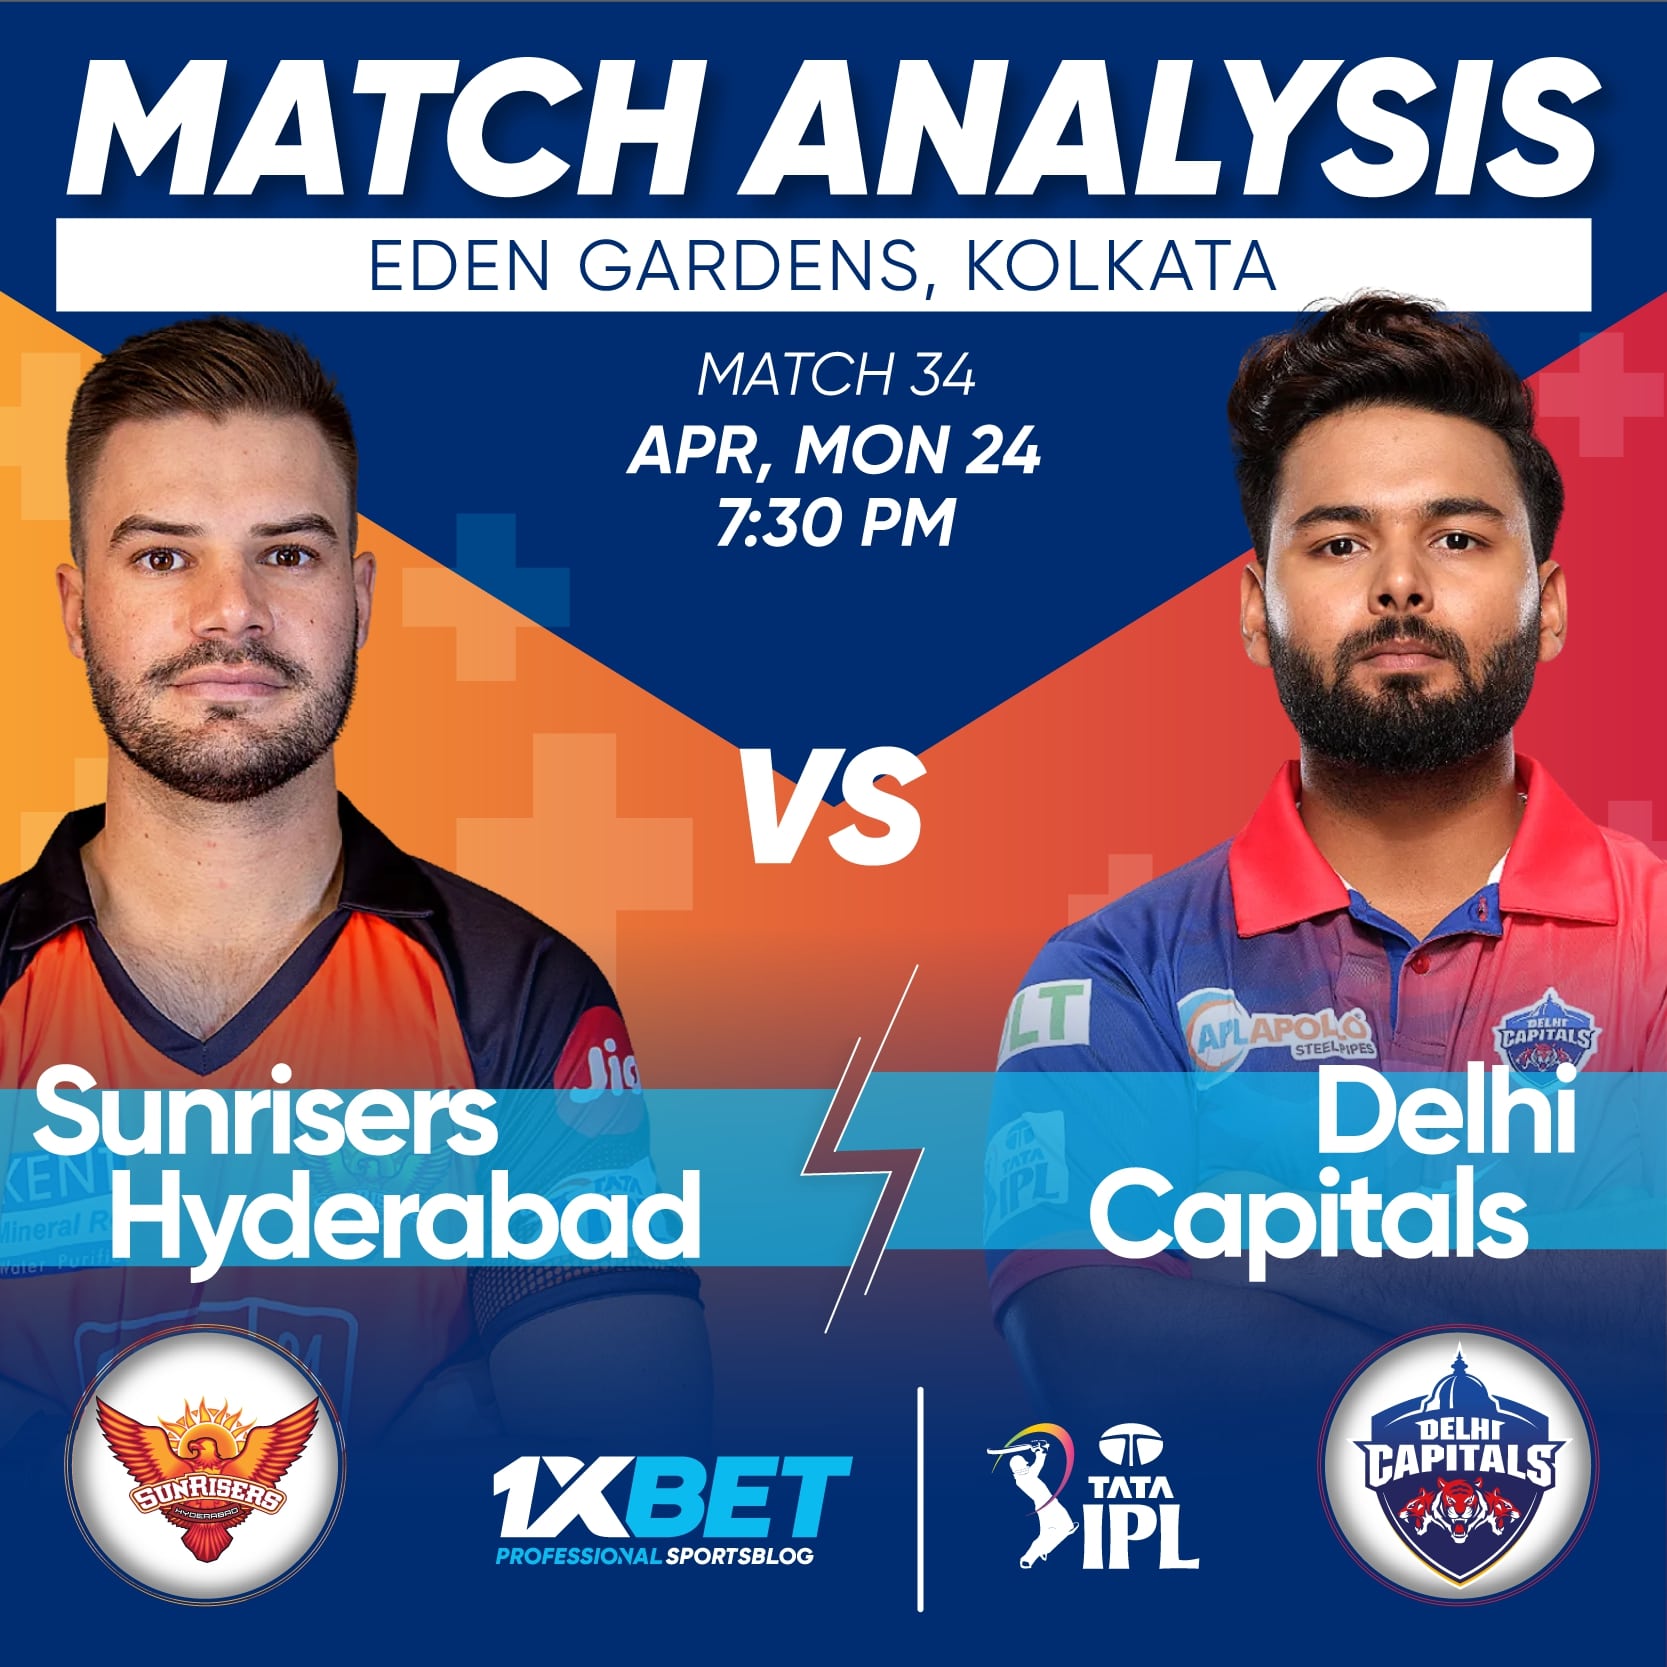 Sunrisers Hyderabad vs Delhi Capitals, IPL 2023, 34th Match Analysis